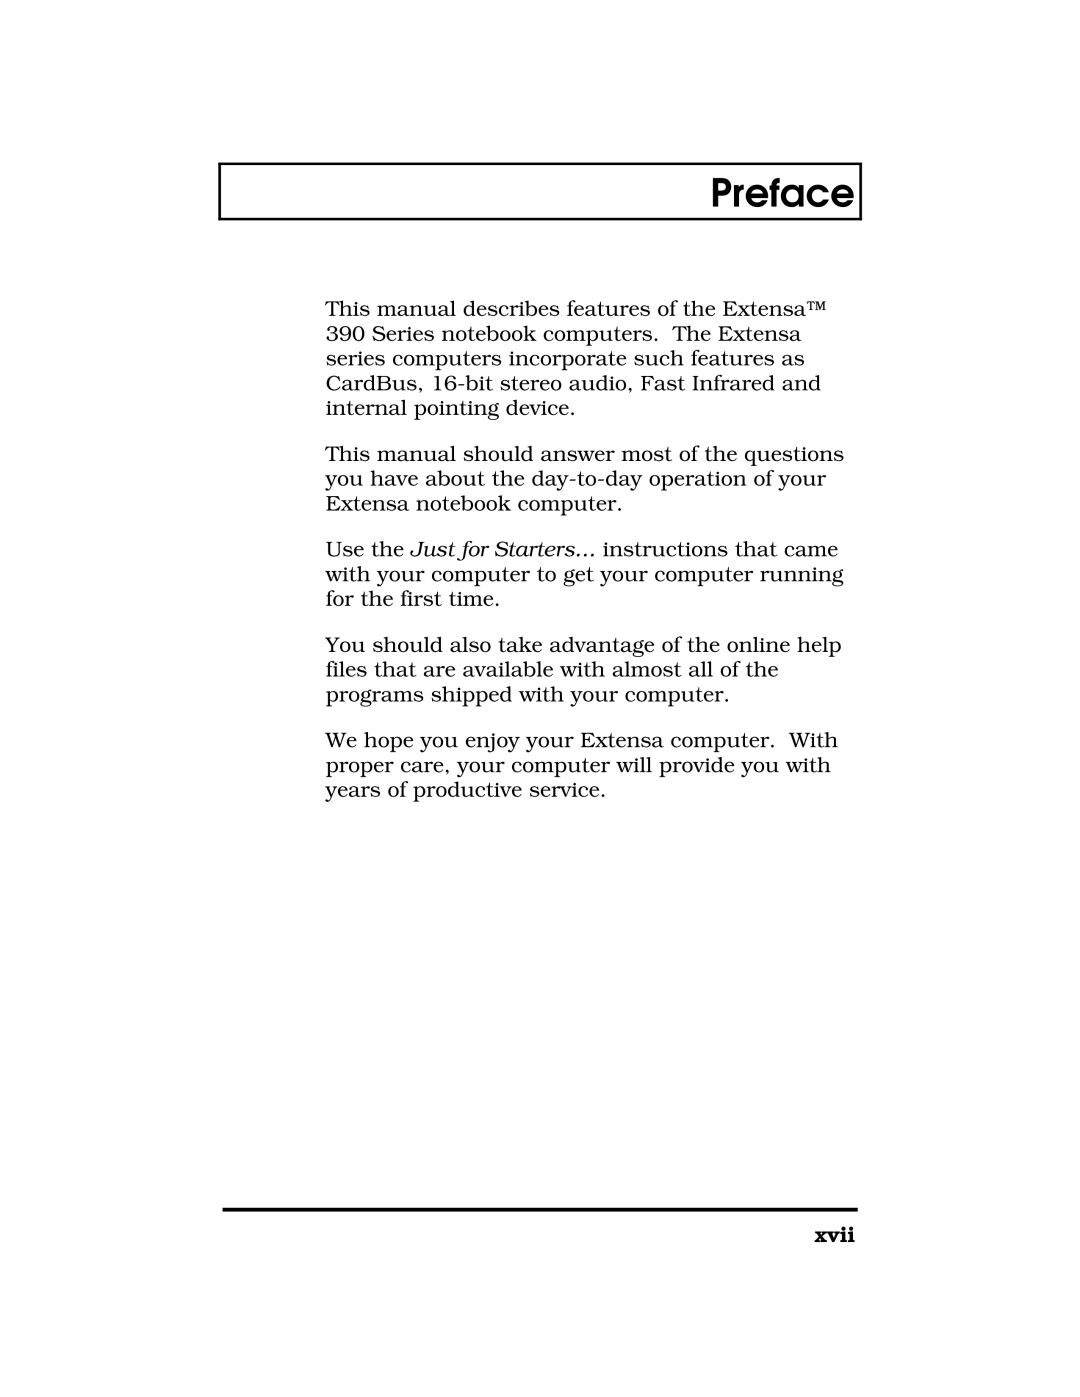 Acer 390 Series manual Preface, xvii 